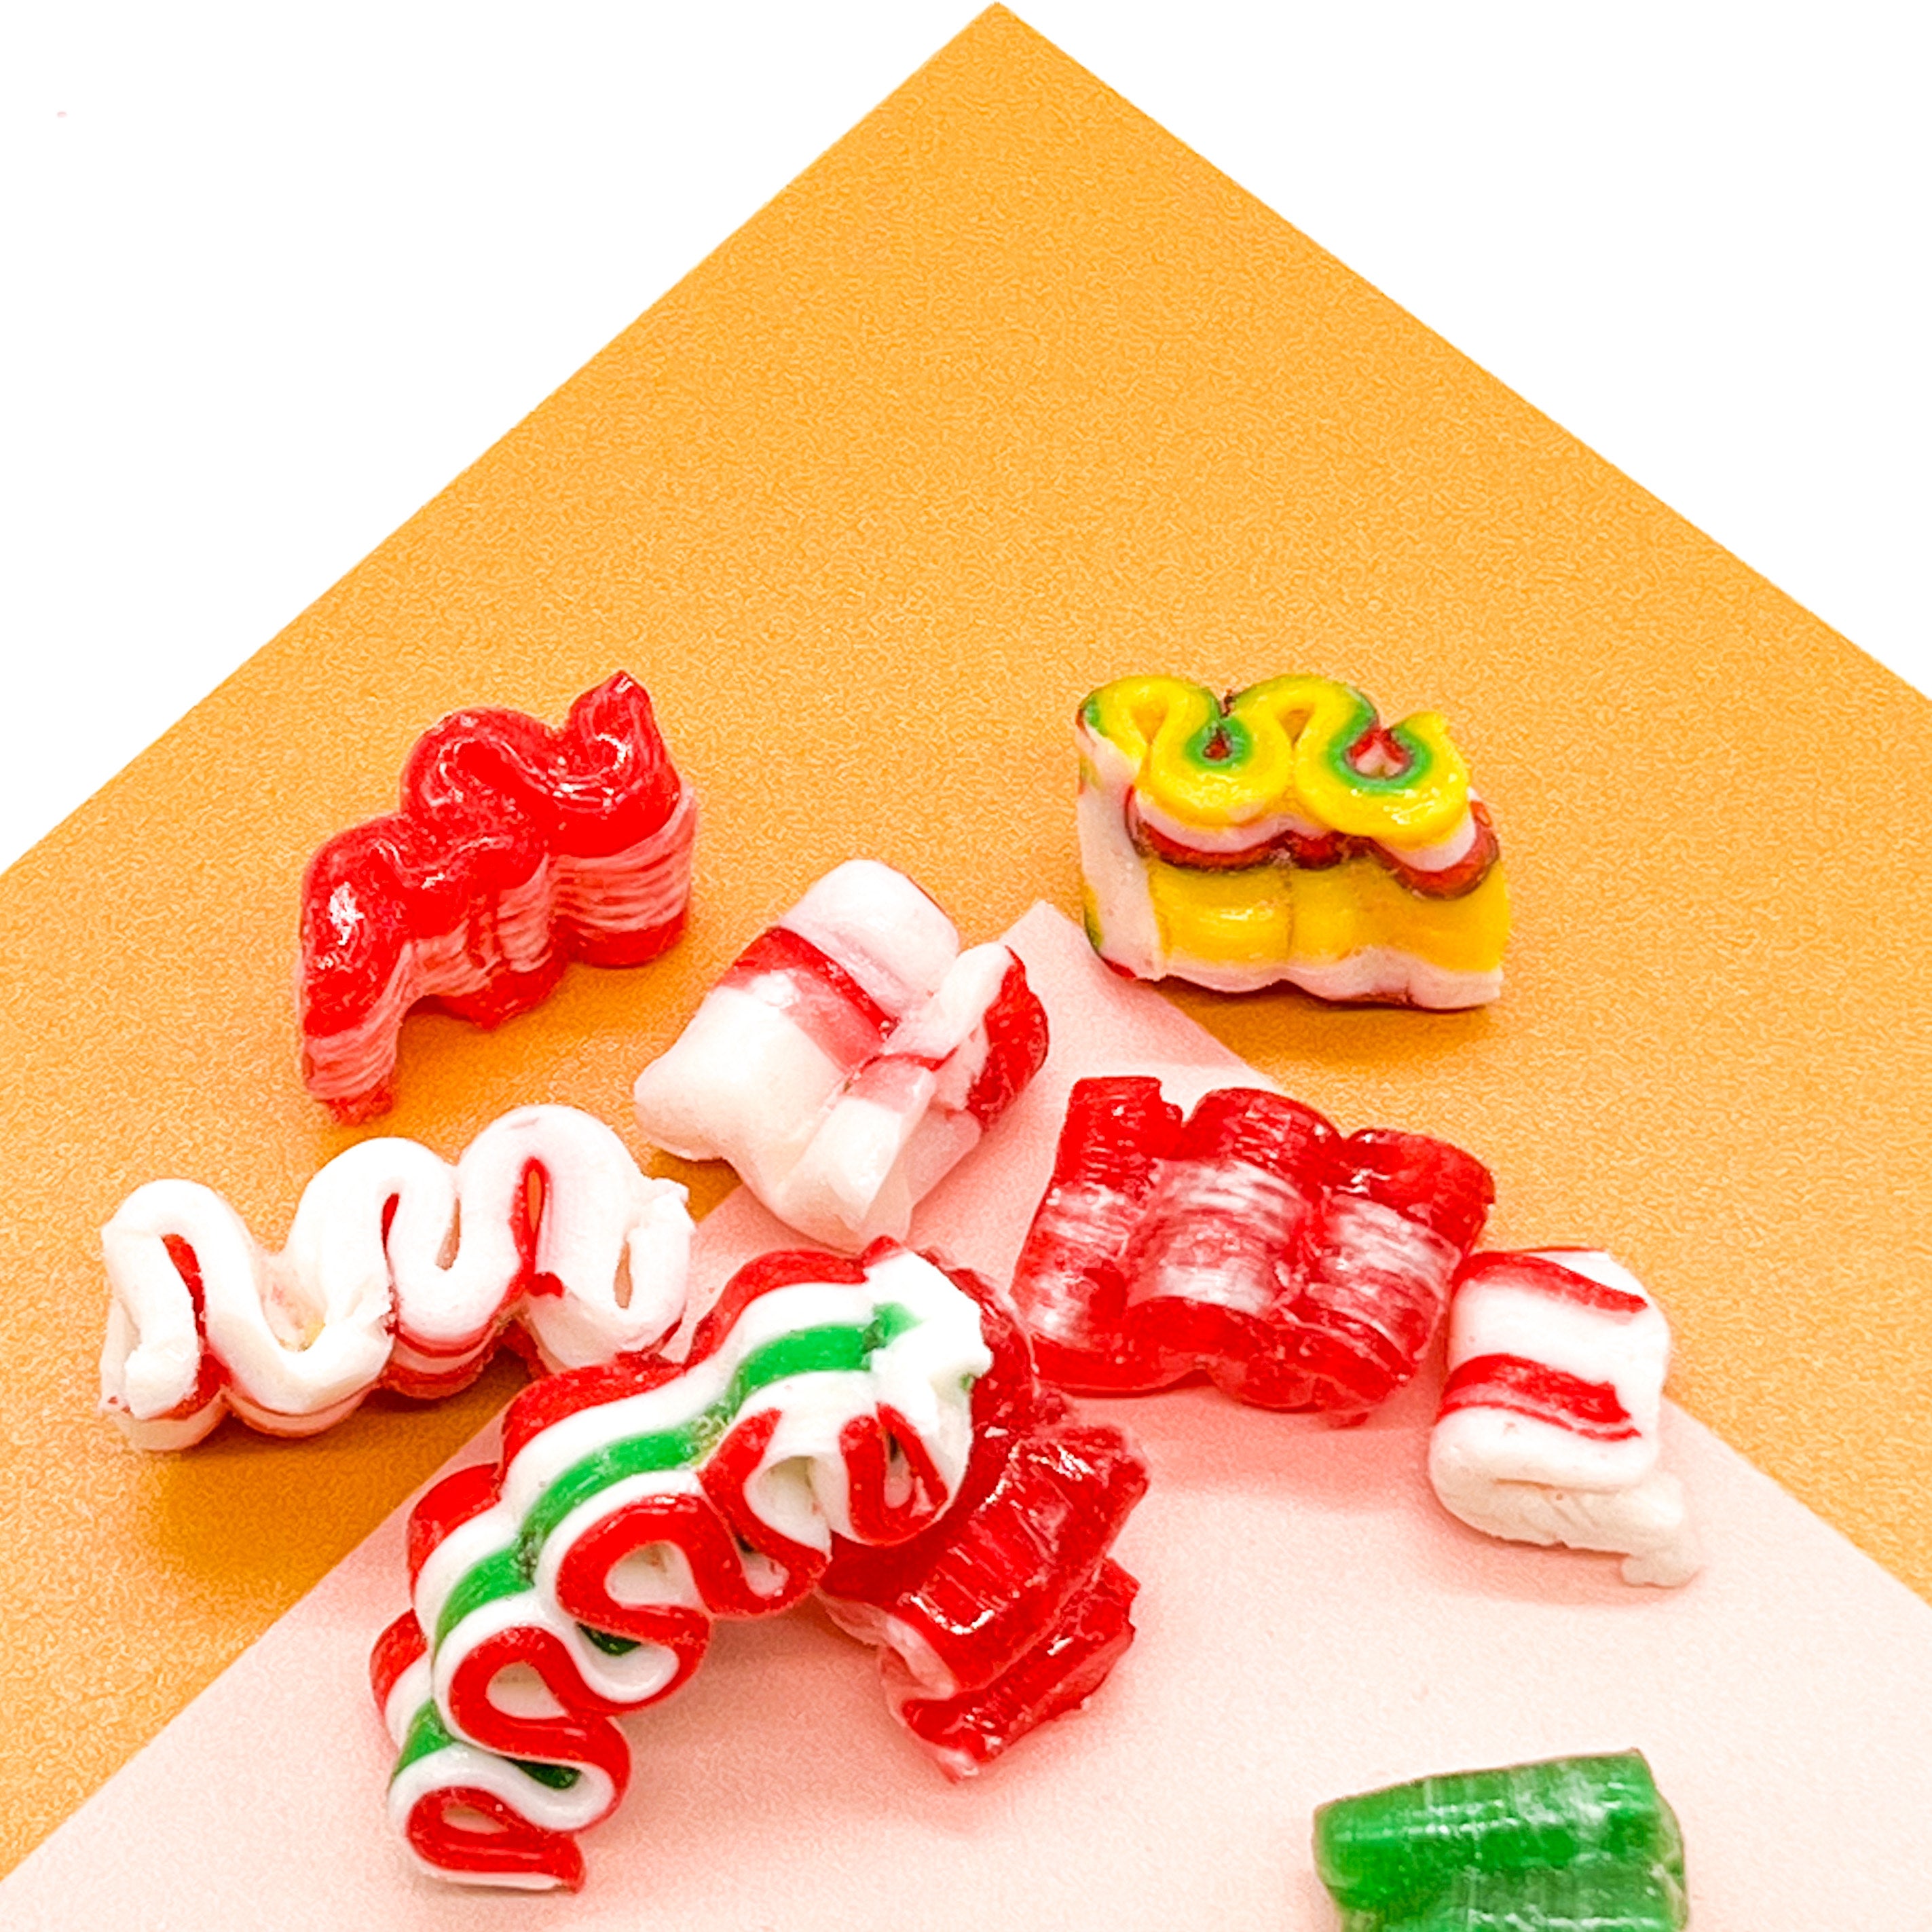 Sevigny Assorted 9 oz Ribbon Candy Gift Box 